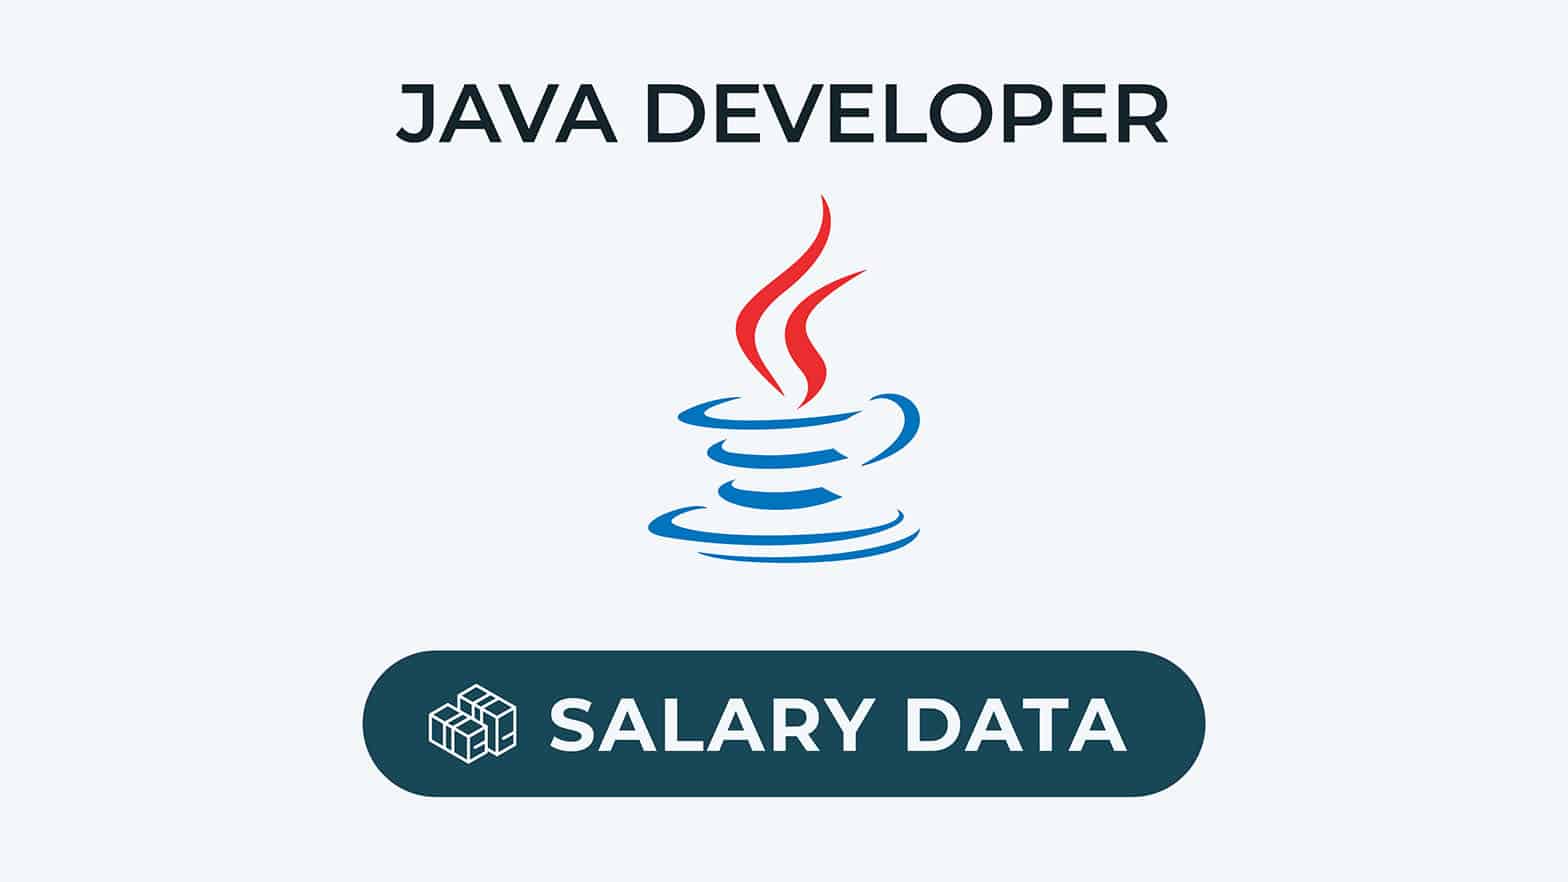 Java developer salary data